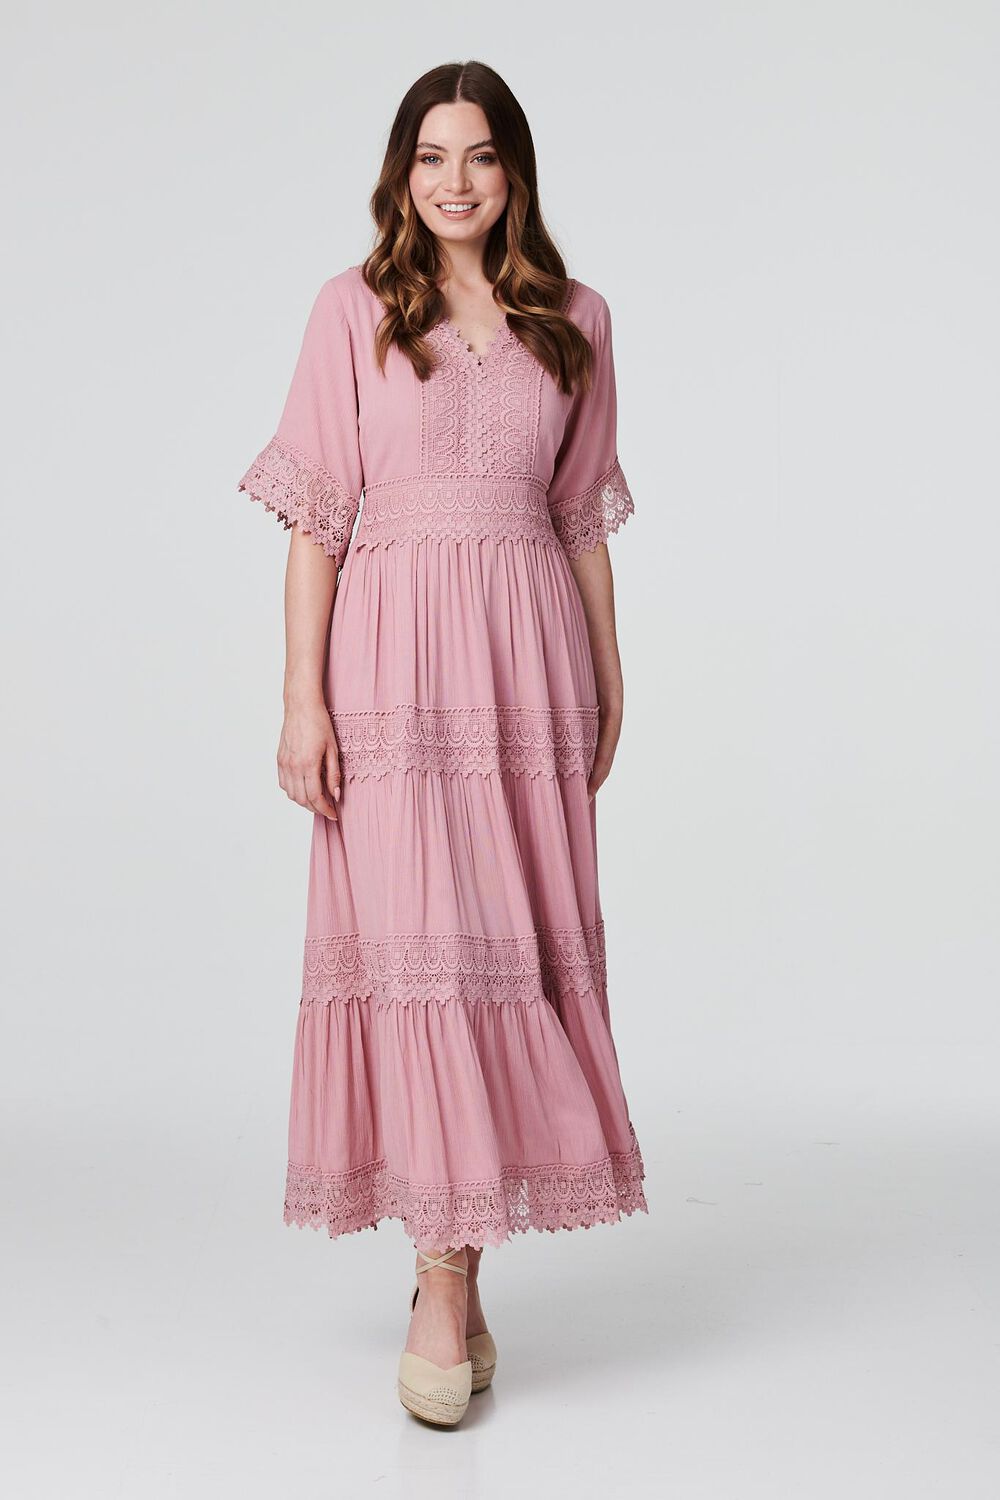 Izabel London Pink - Short Sleeve Crochet Maxi Dress, Size: 10